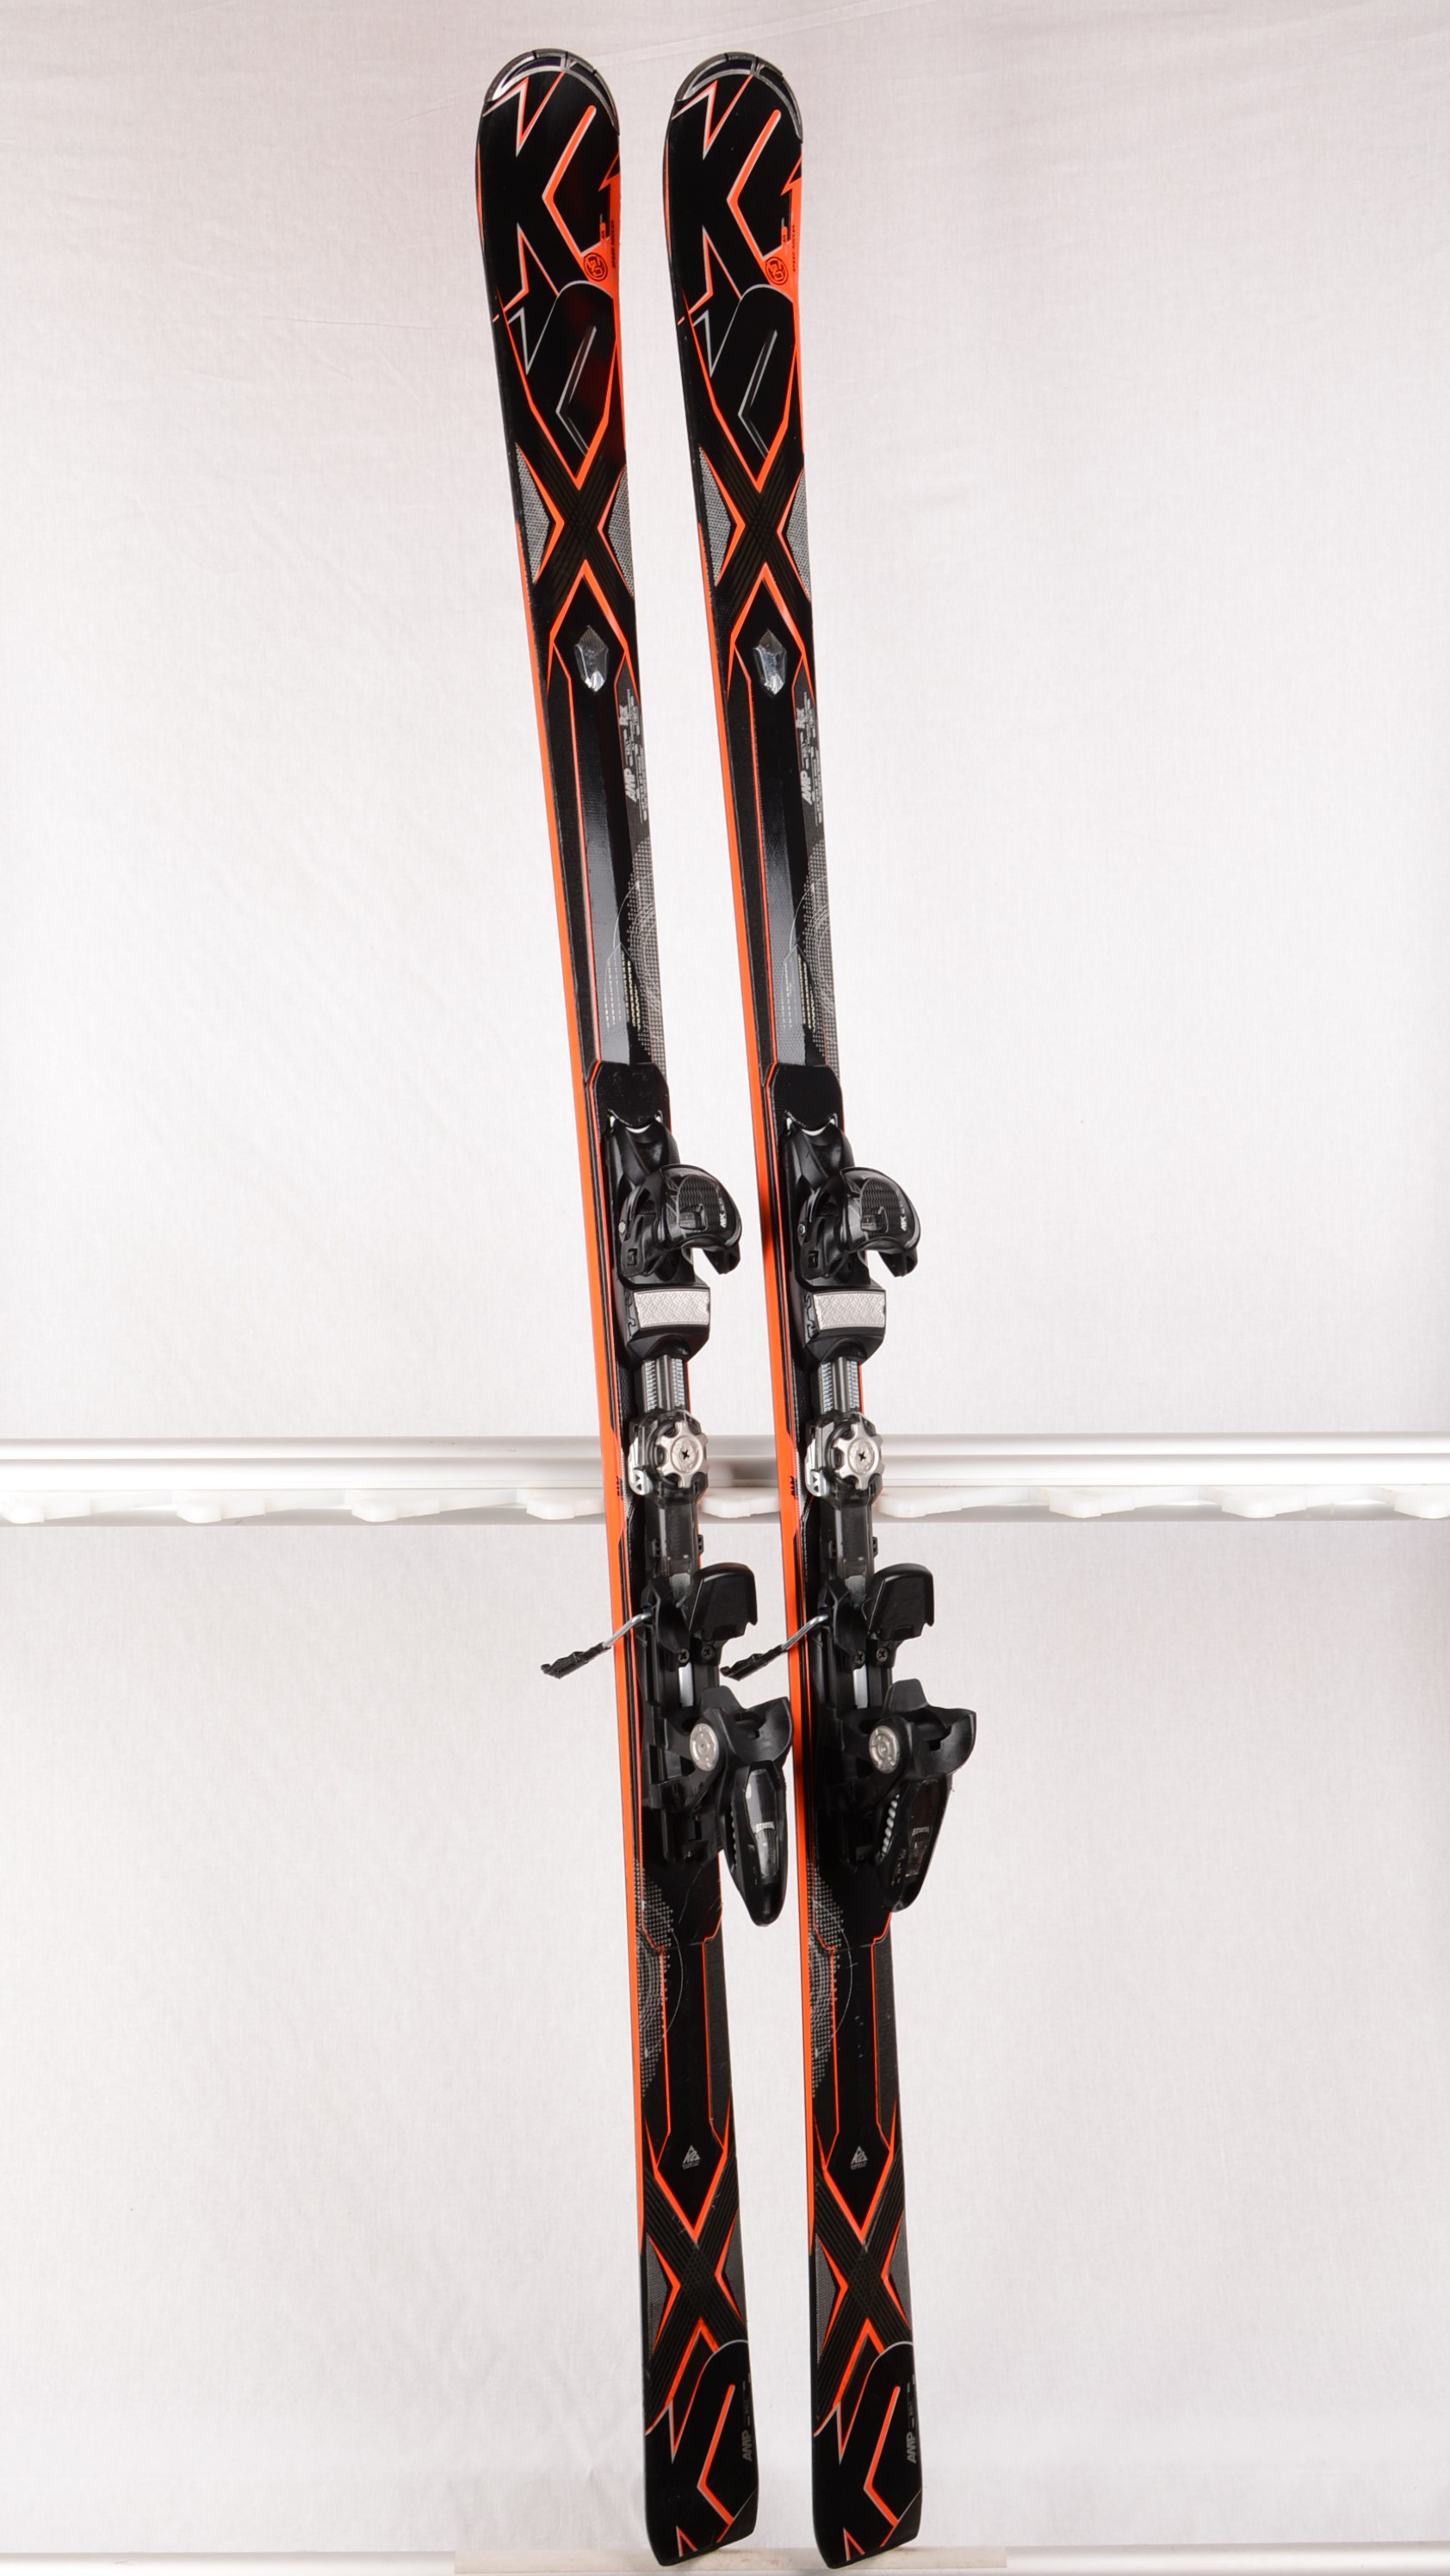 skis K2 AMP BOLT RX black/orange, AM rocker, METAL laminate, RX